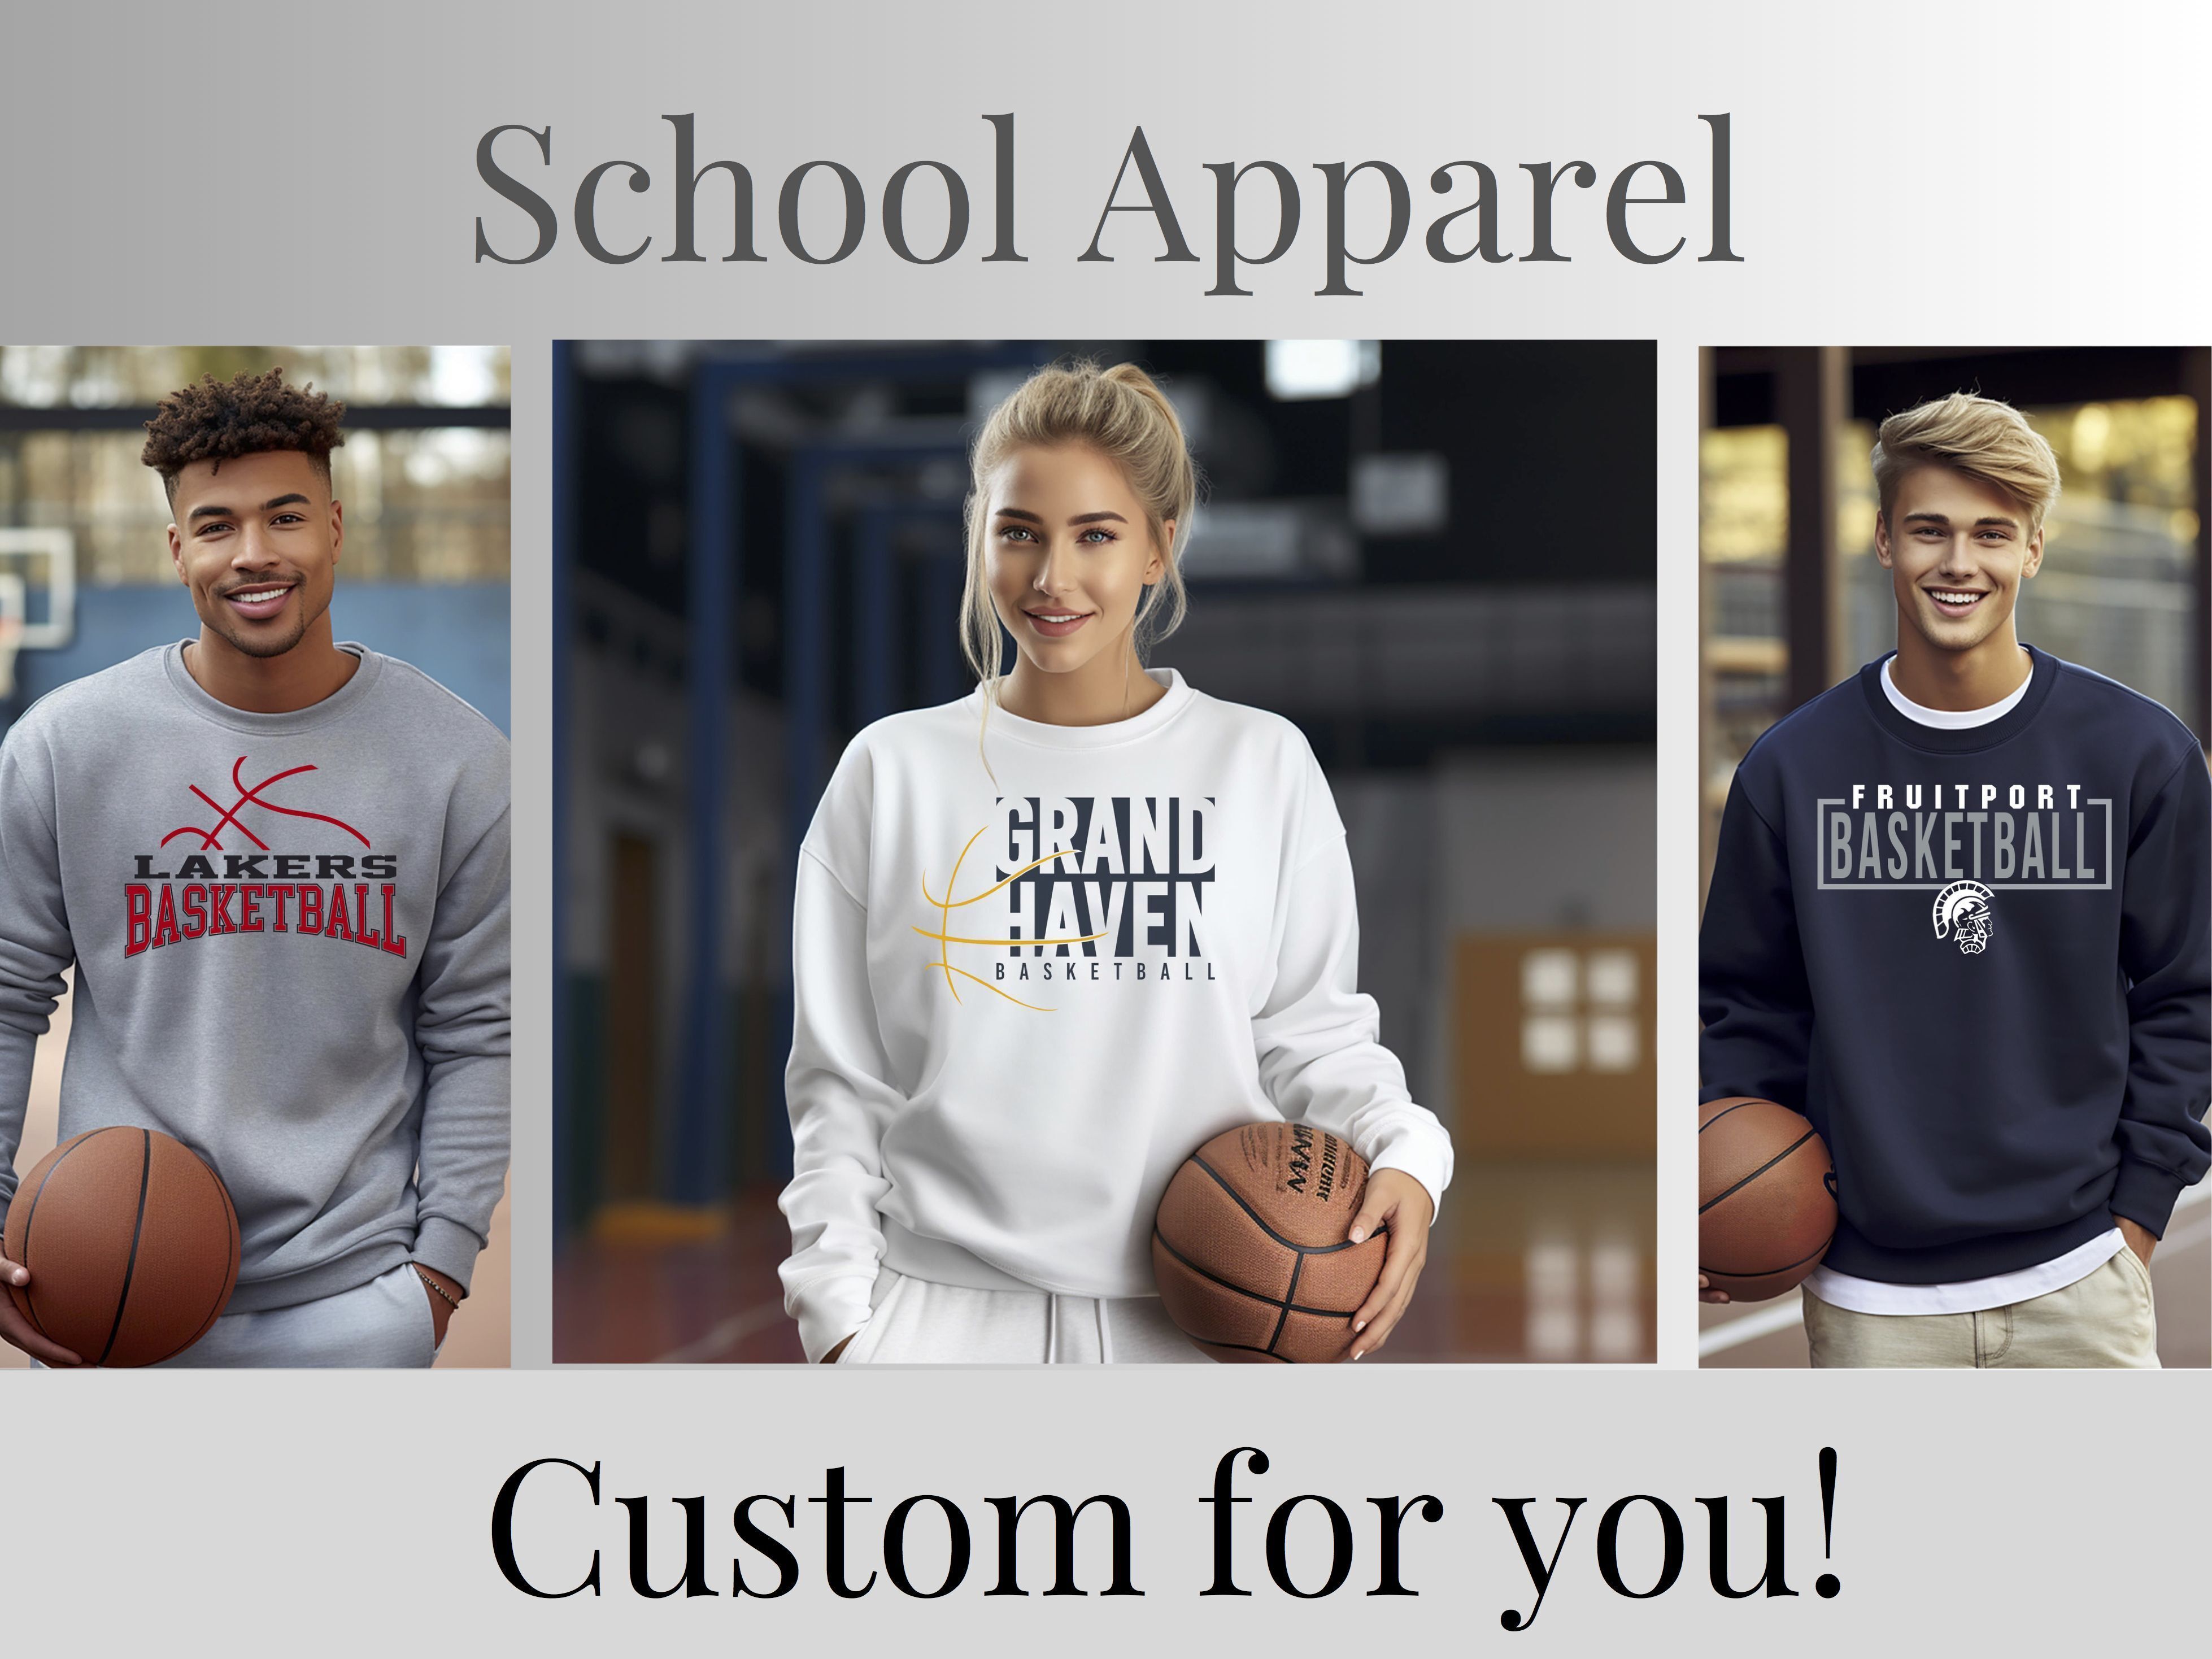 Get custom sports apparel!